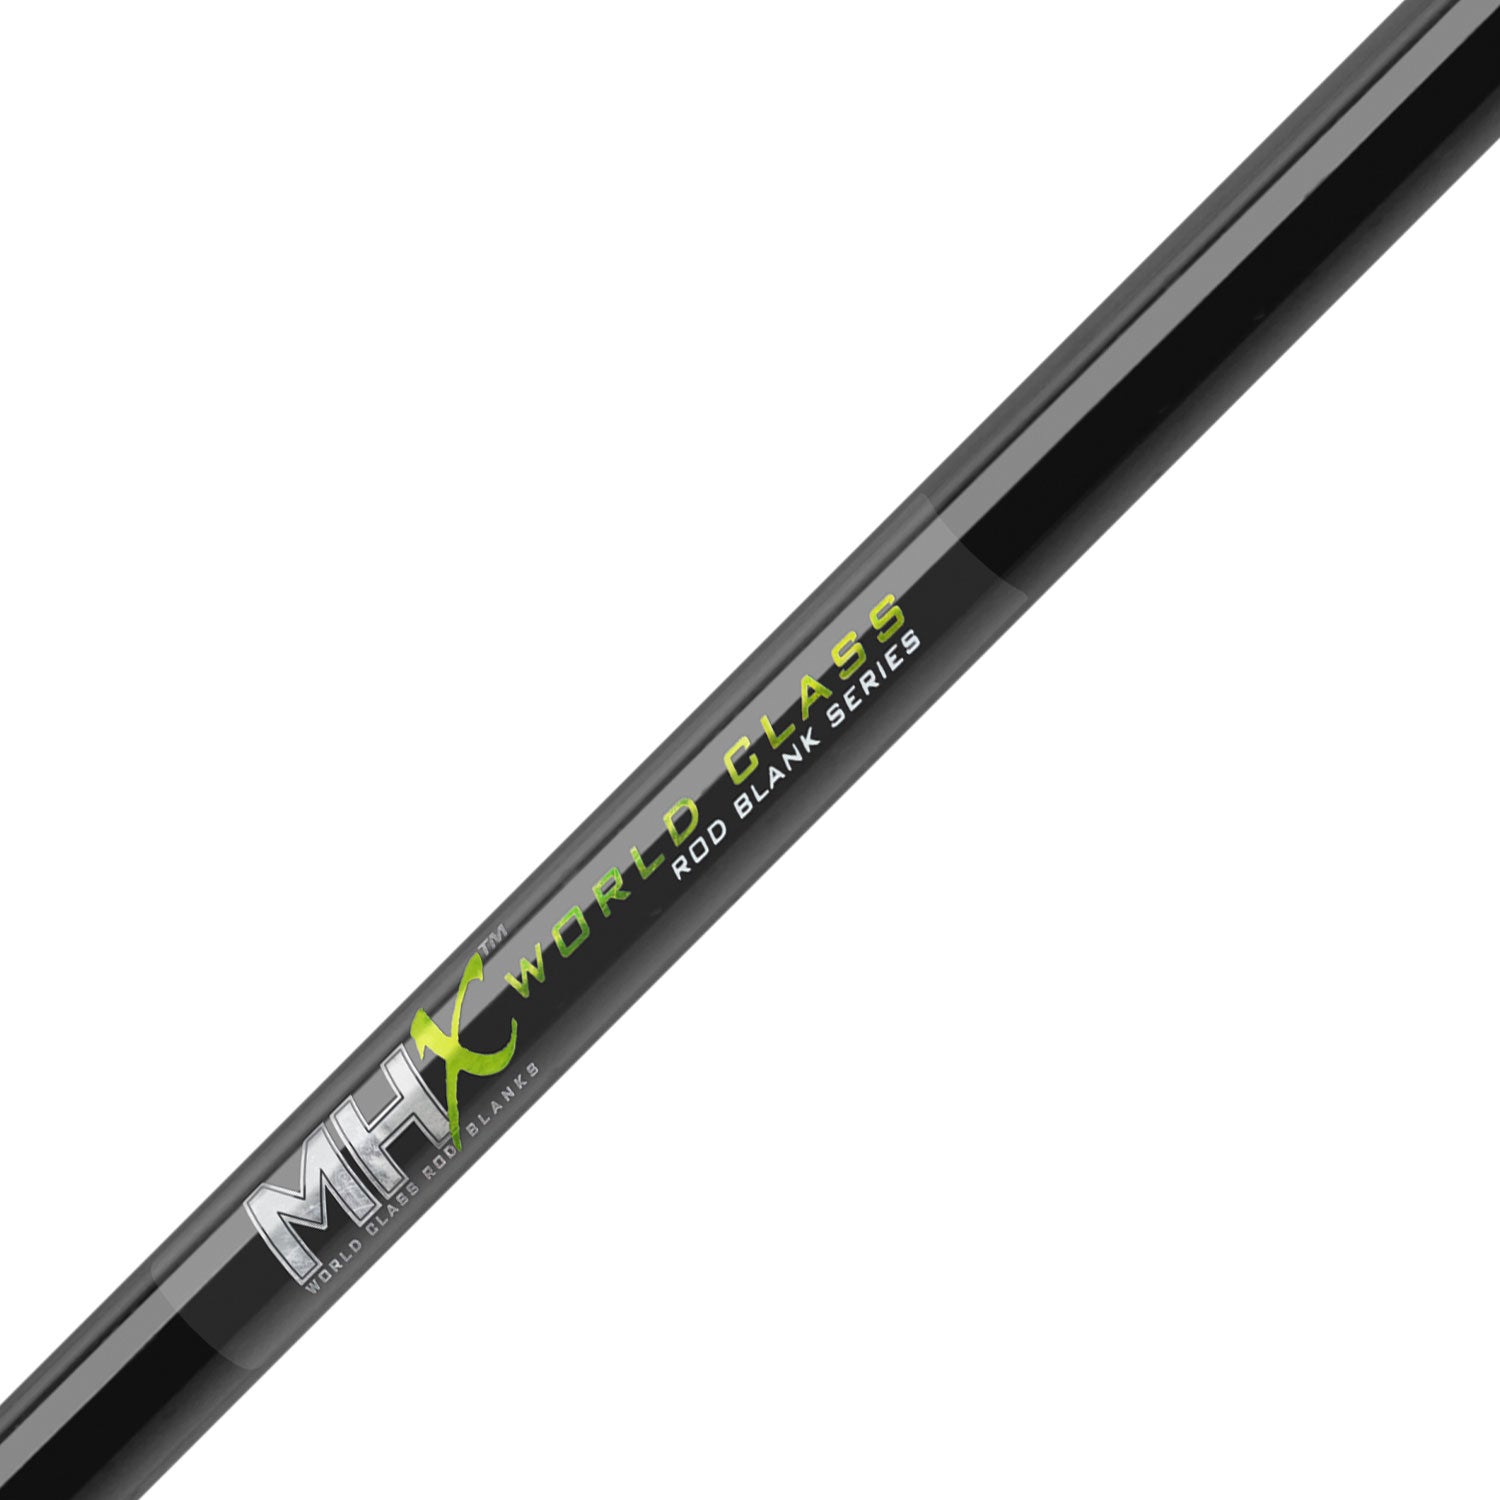 MHX 7'6" Med-Heavy Light Saltwater Rod Blank - L904